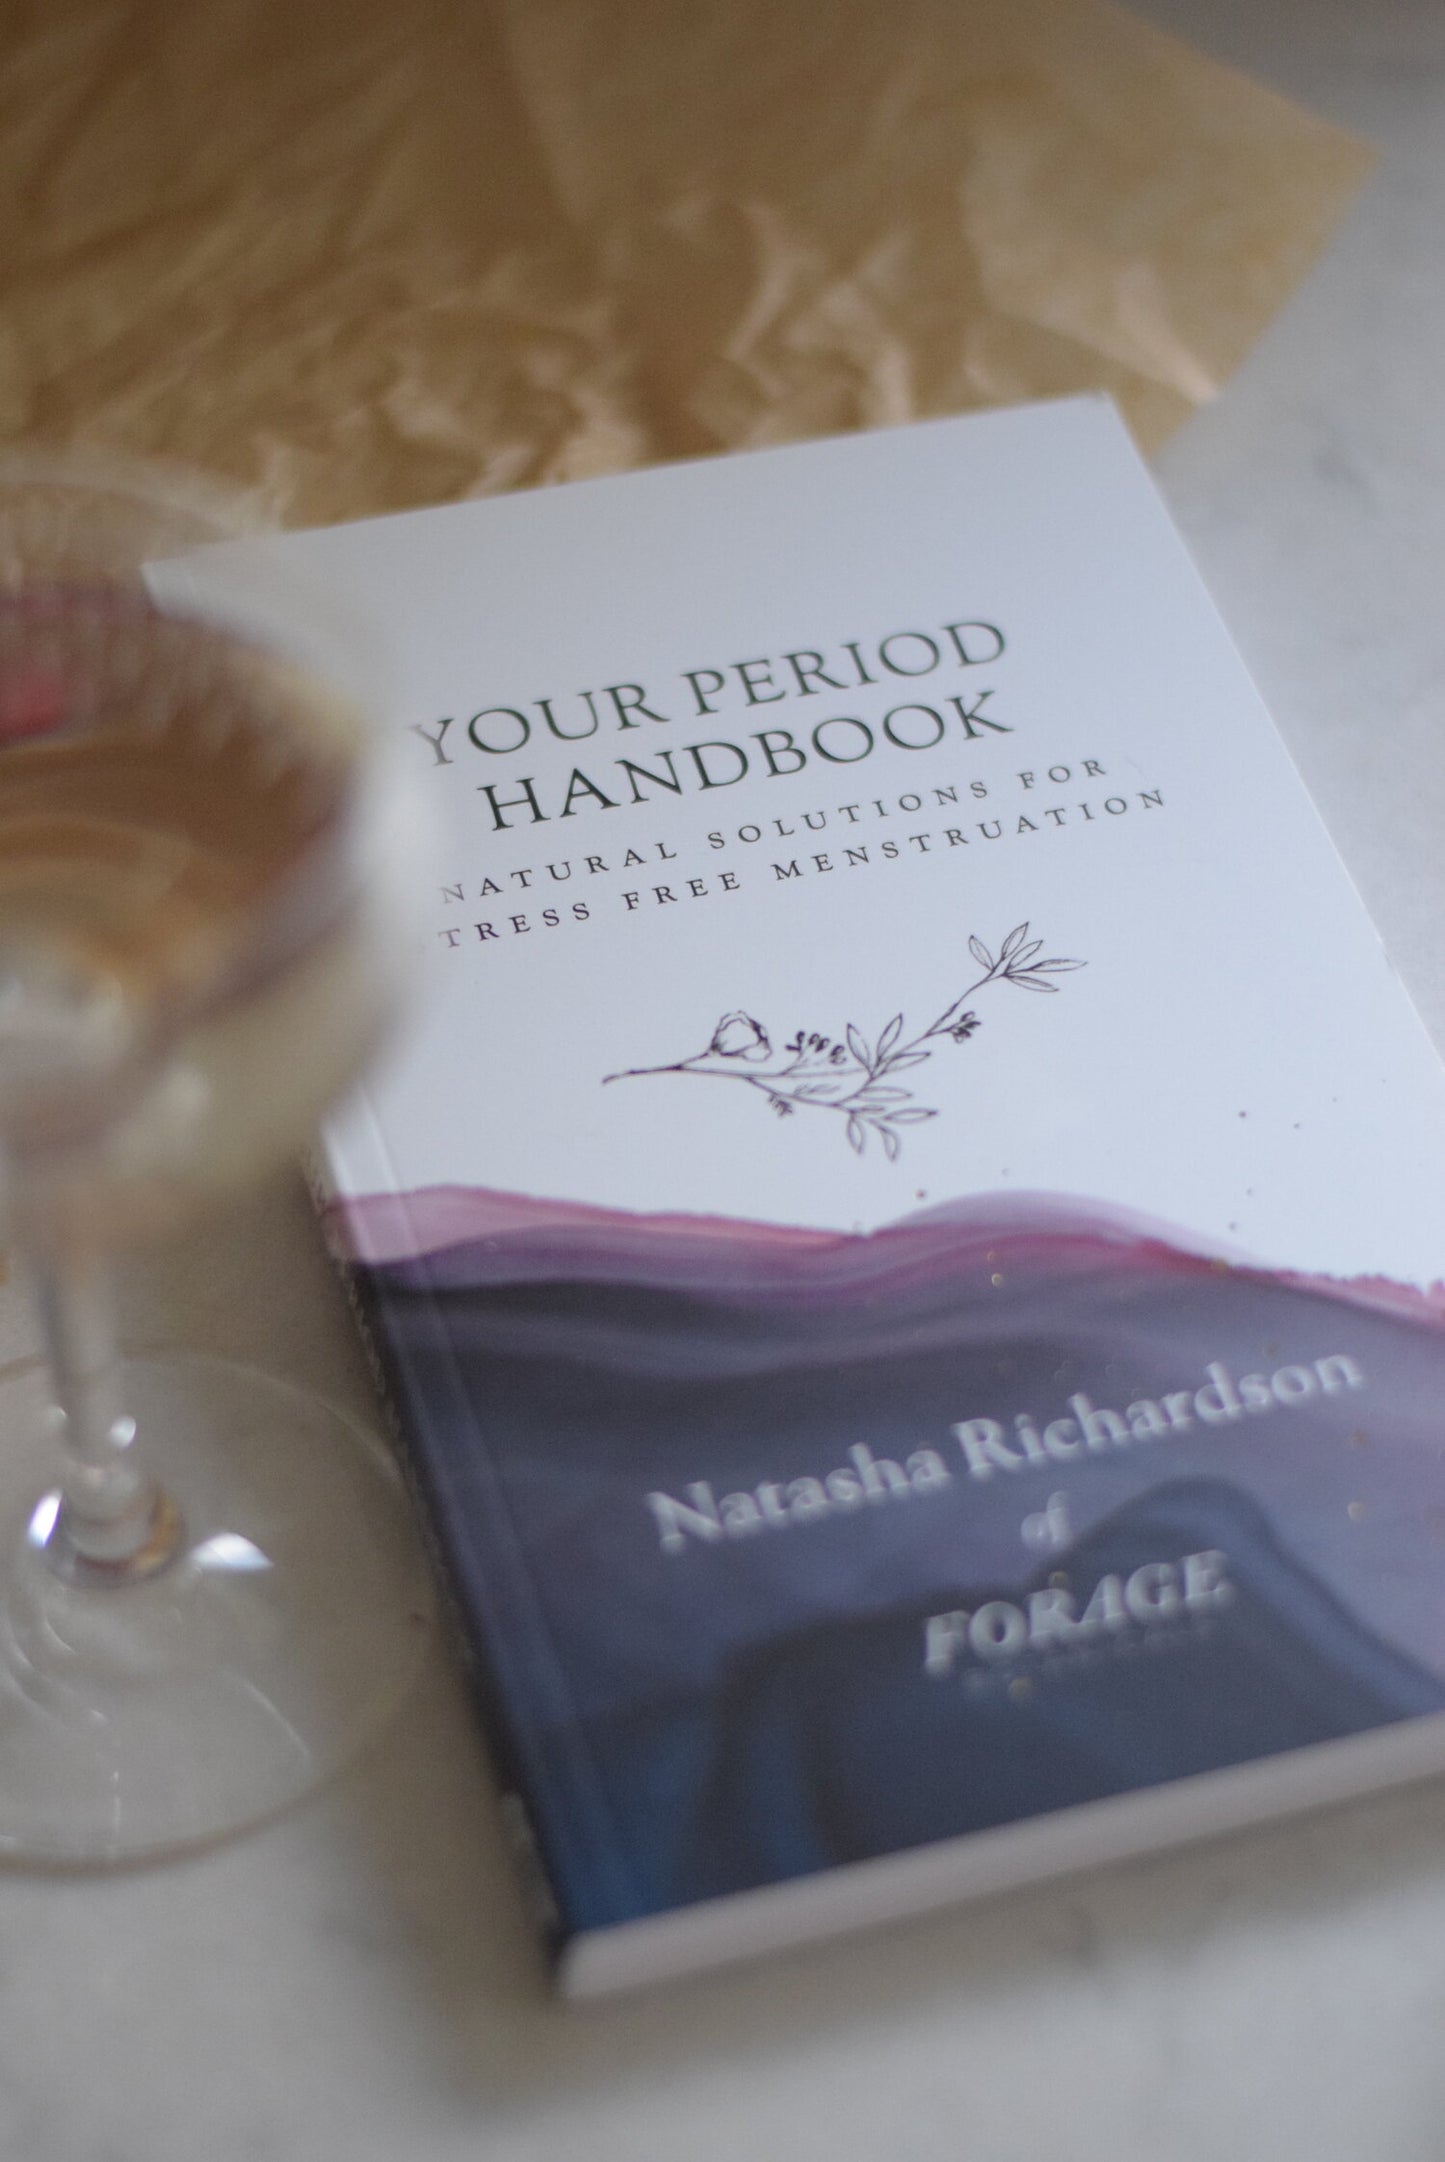 Your Period Handbook